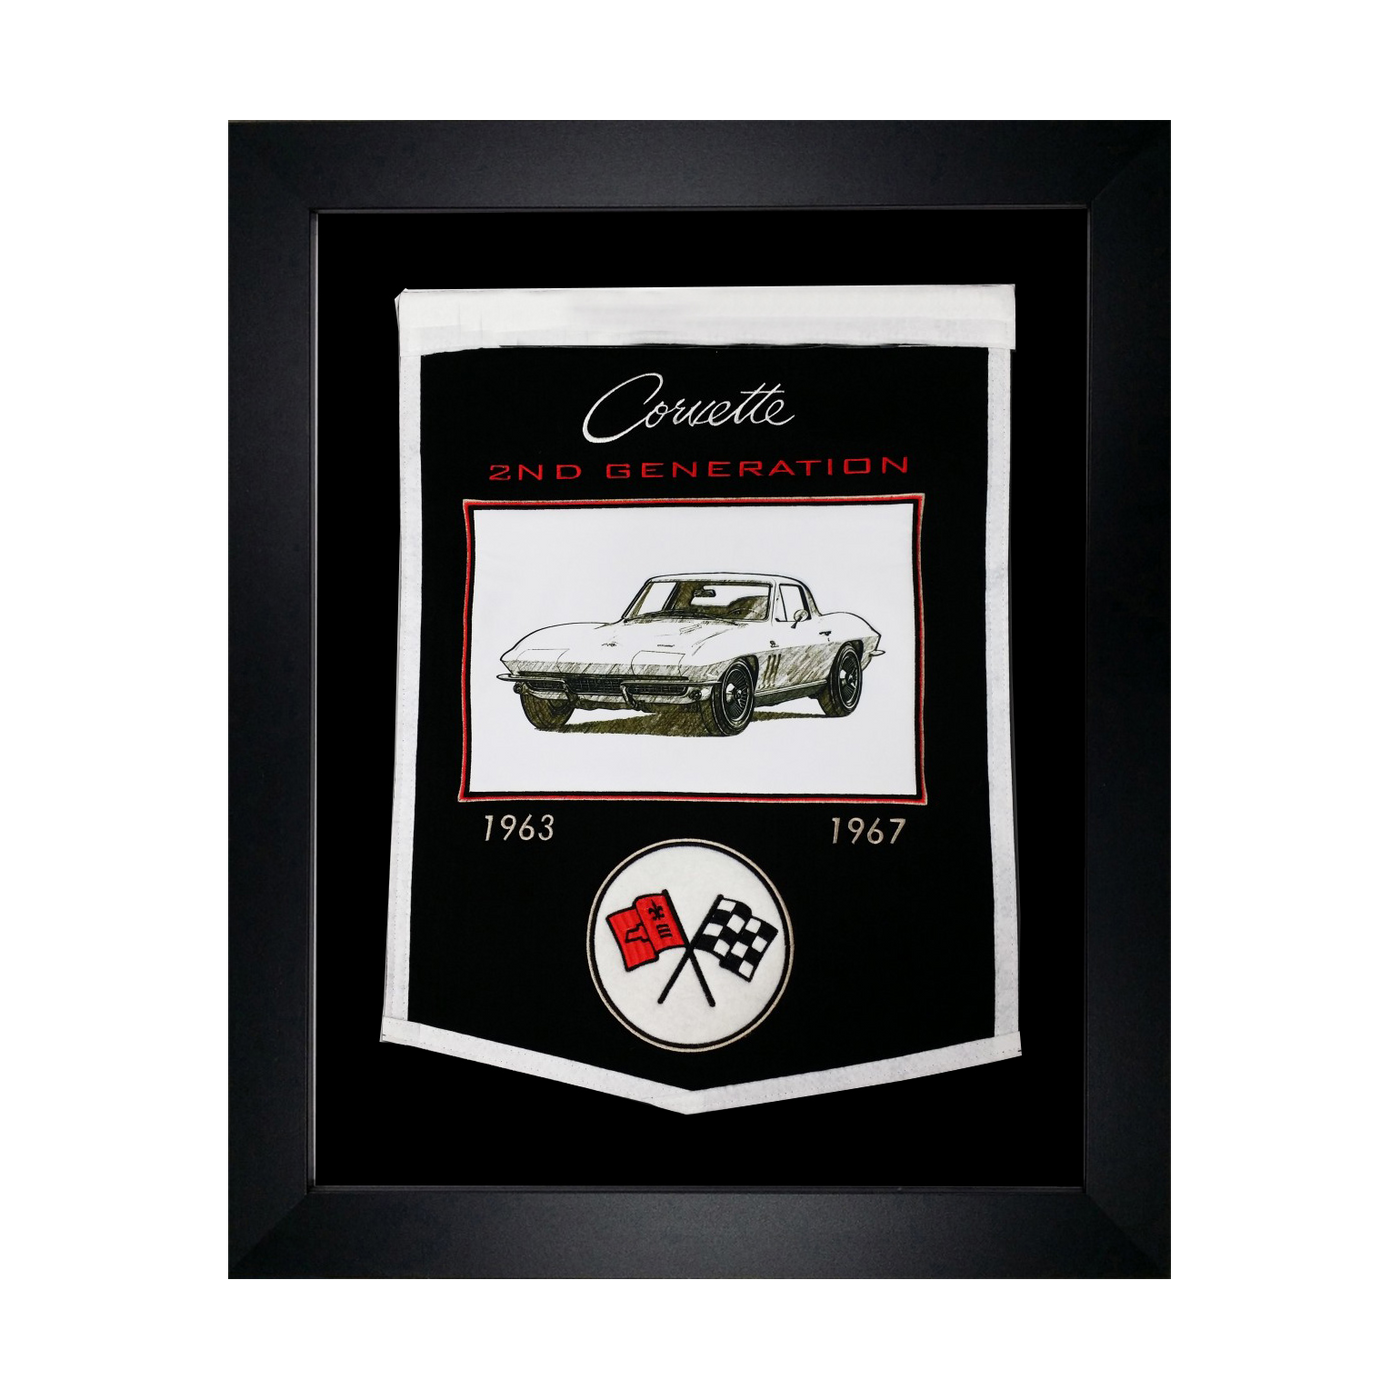 Framed Wool Embroidered Corvette C2  Gen Banner 21"x 27"